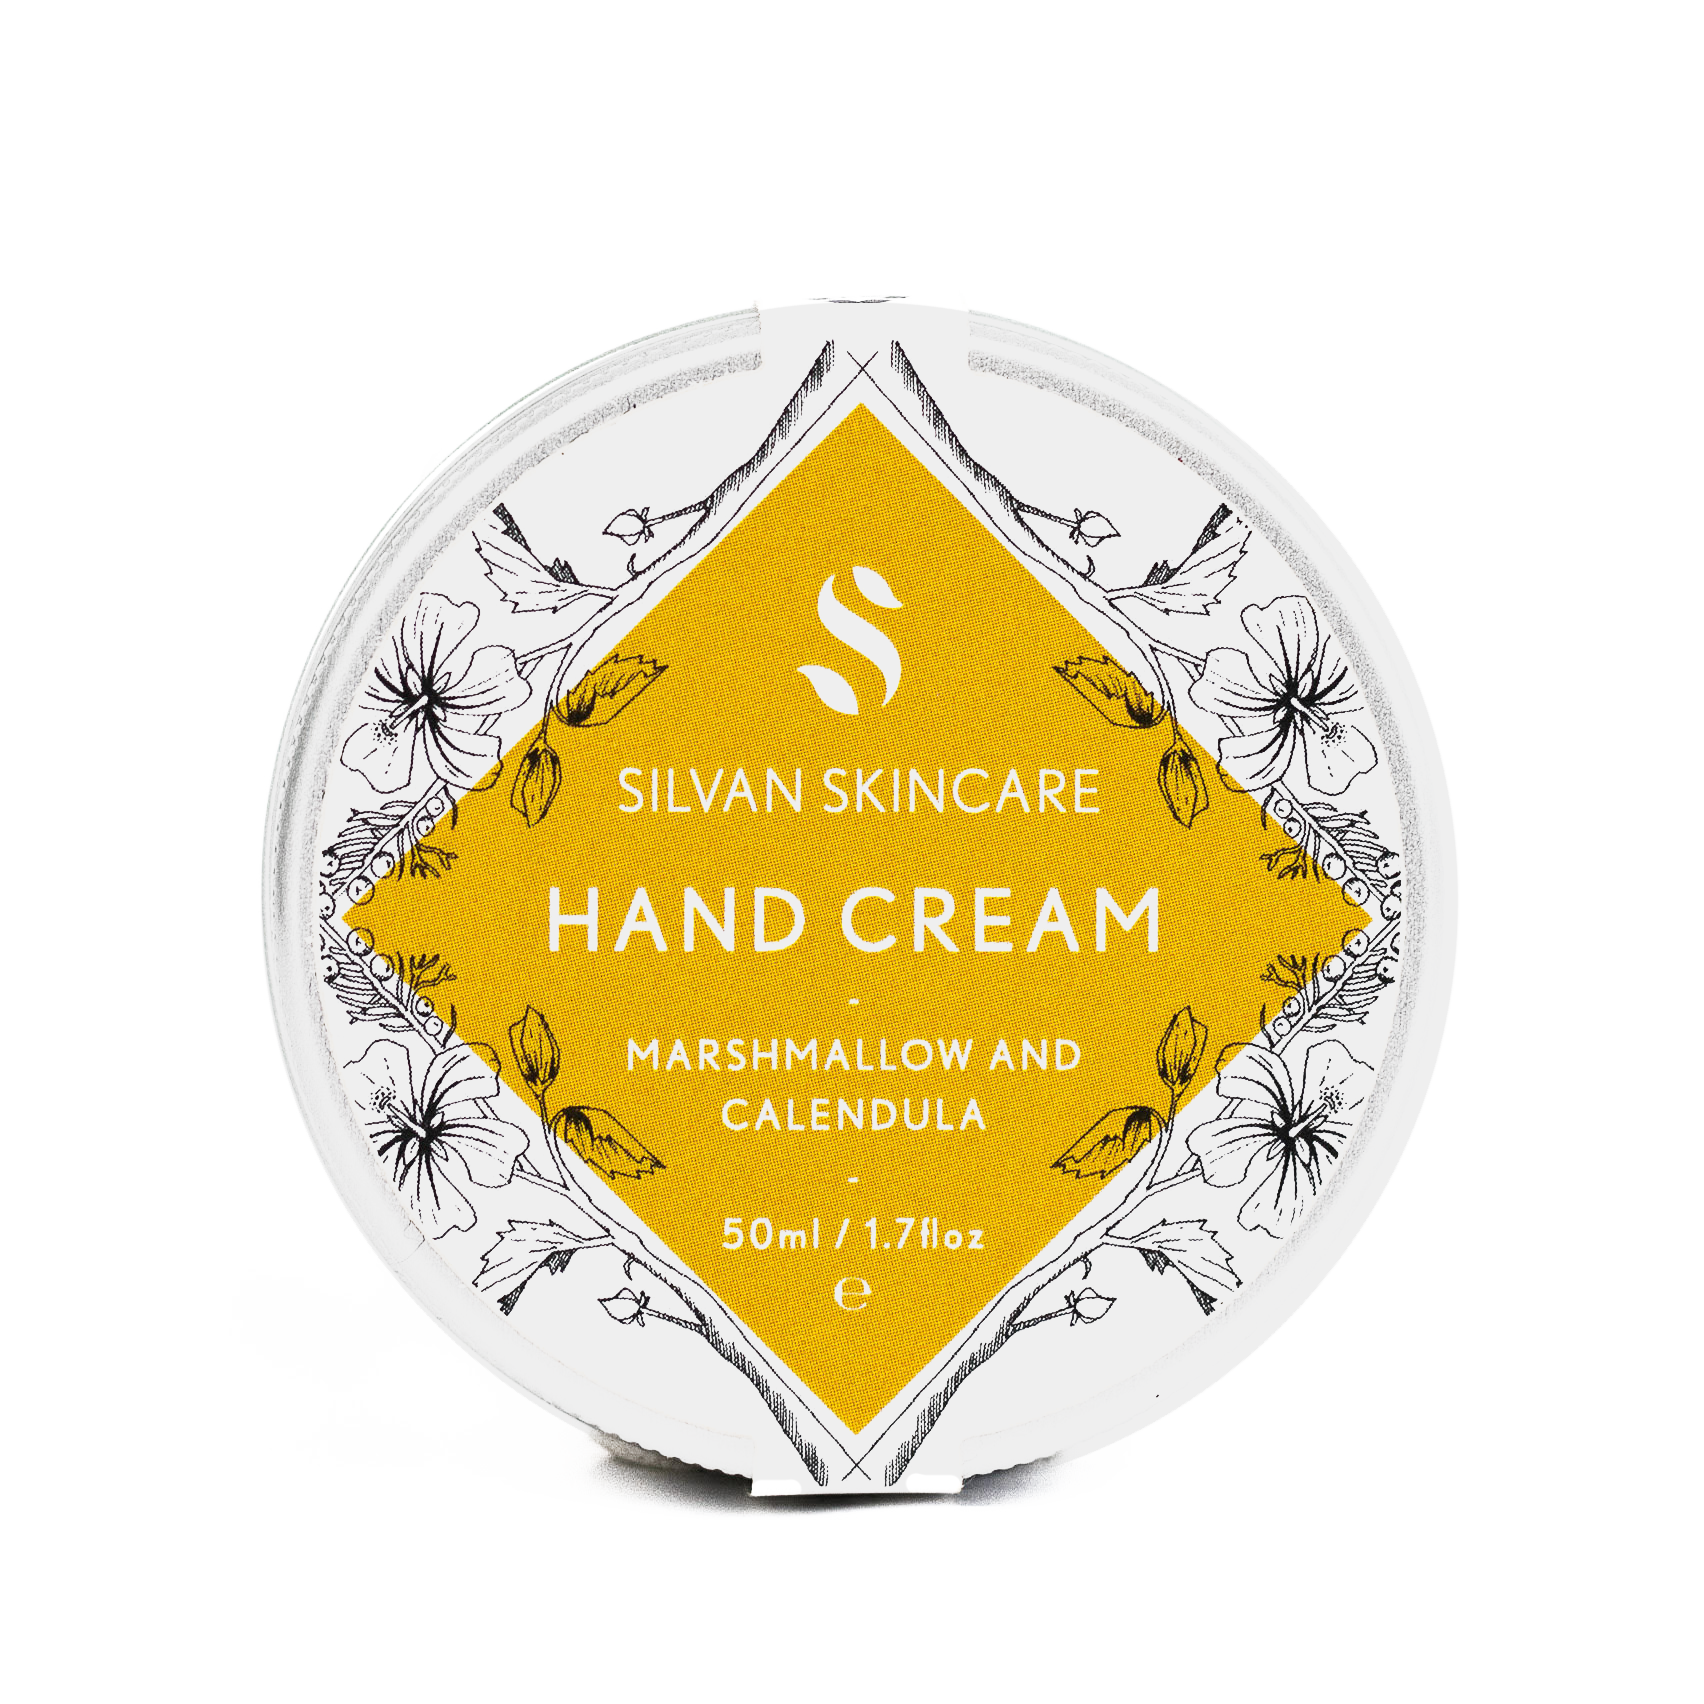 BLOMMA Beauty, Silvan Skincare Marshmallow and Calendula Hand Cream, vegan_50ml £12.png